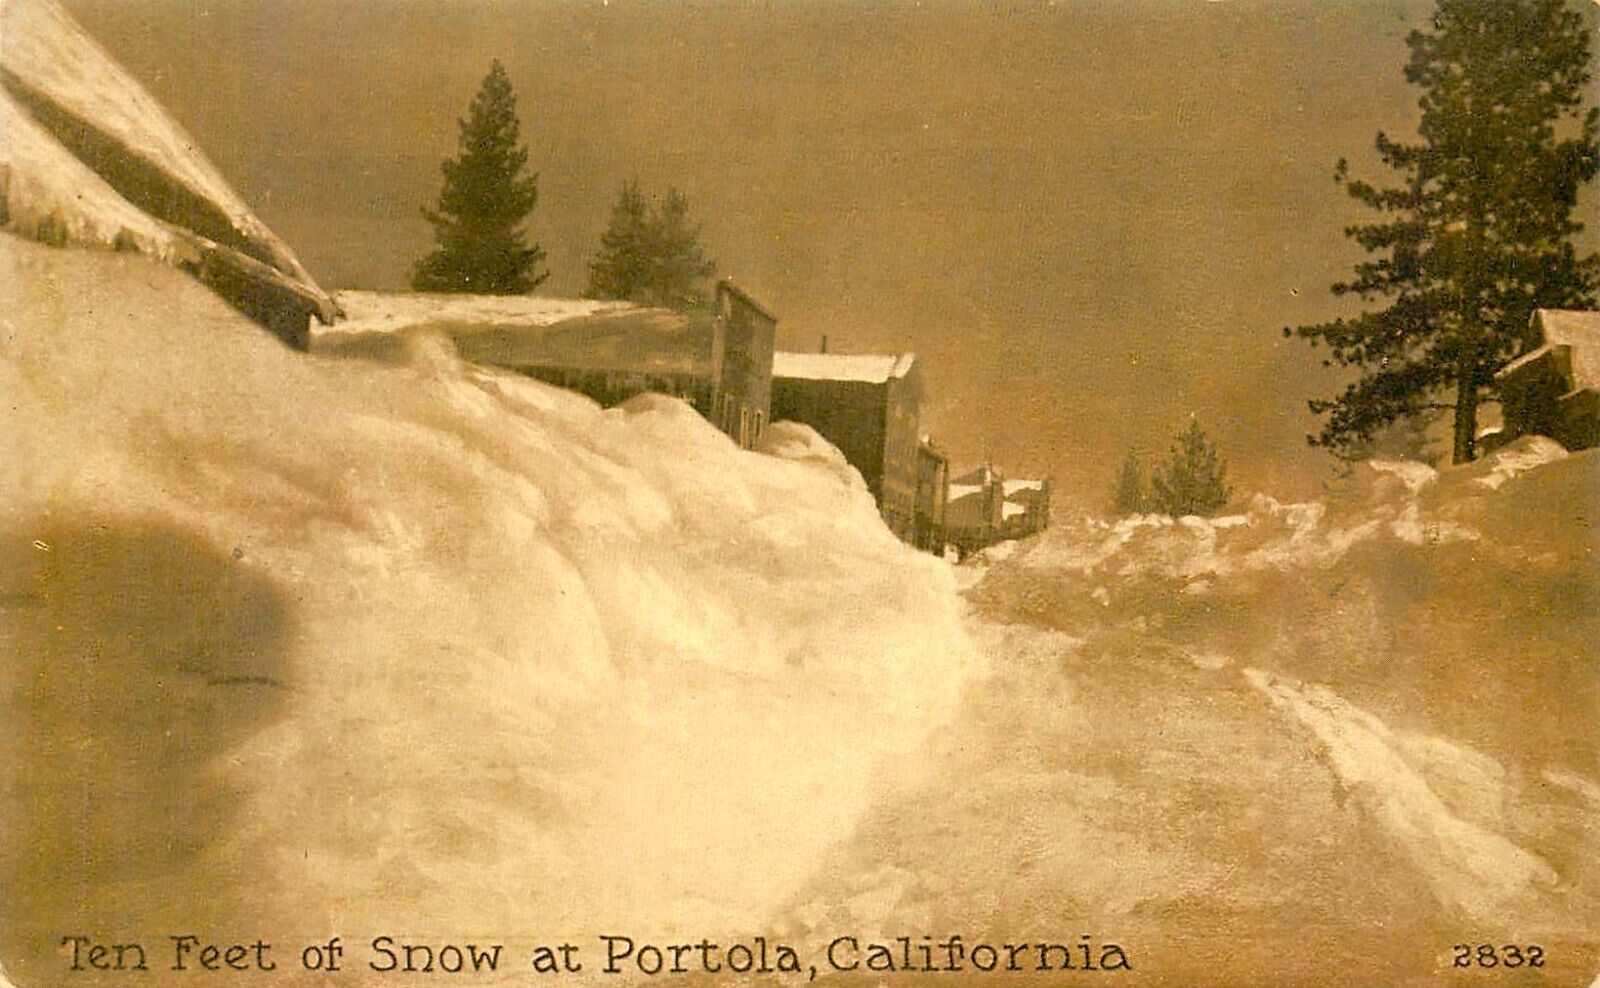 10 FEET OF SNOW IN PORTOLA, CALIFORNIA, VINTAGE POSTCARD (SV 262)